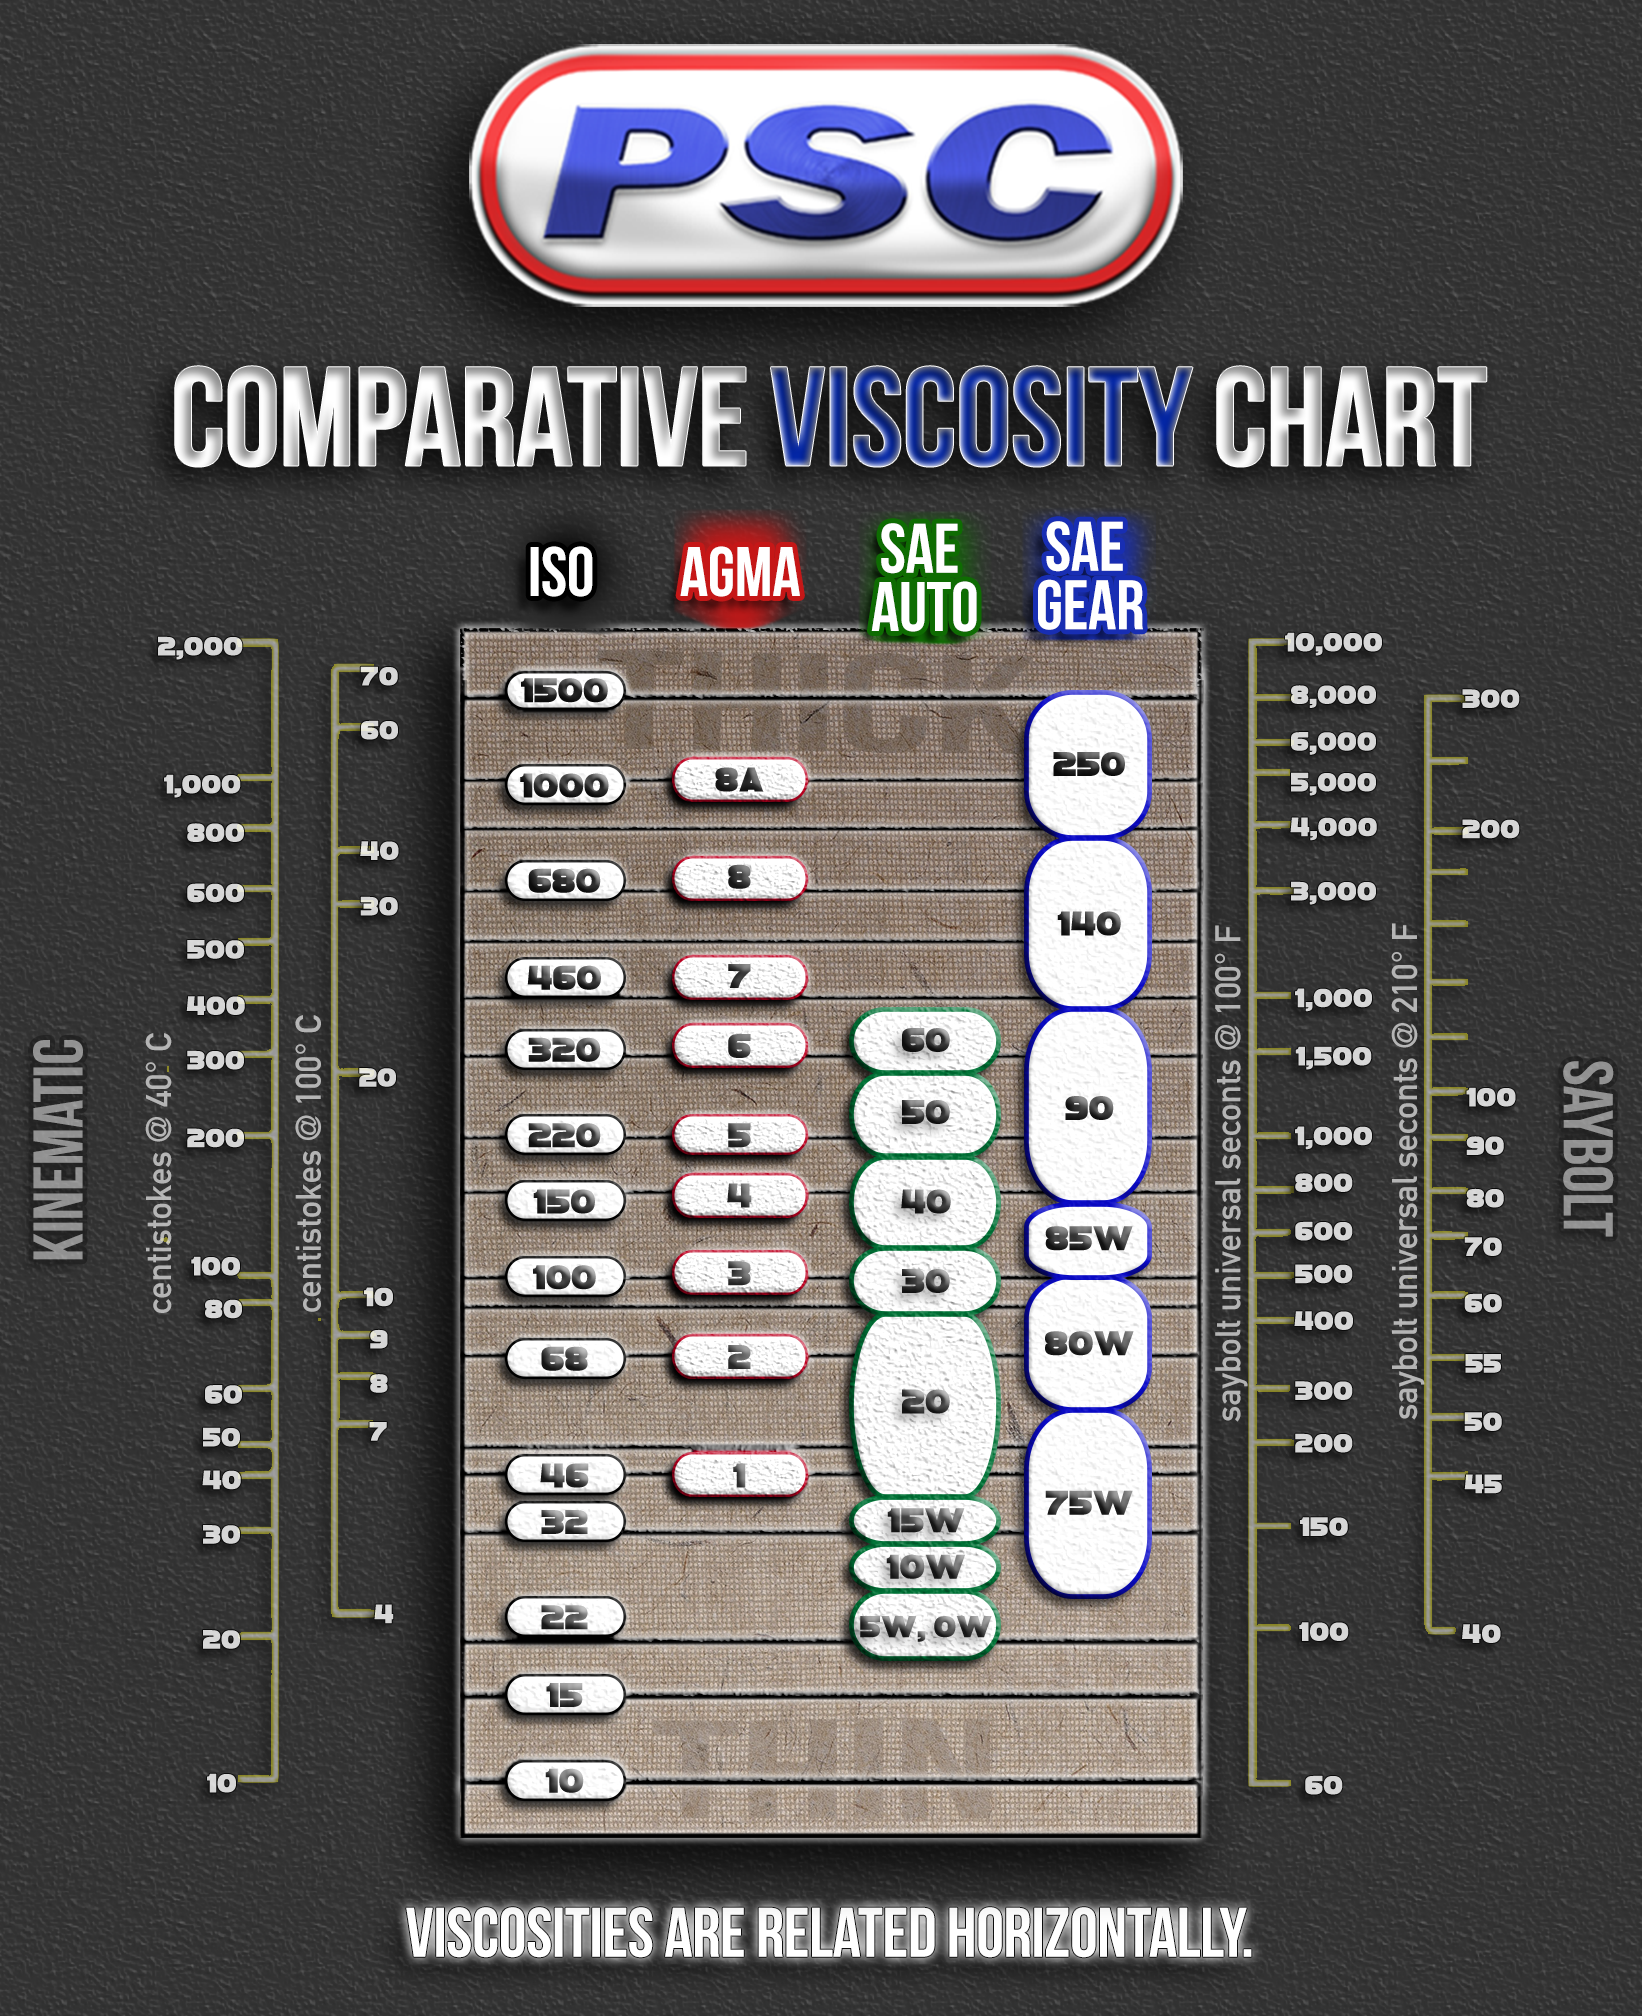 oil-viscosity-comparison-chart-iso-vg-agma-sae-gear-sae-auto